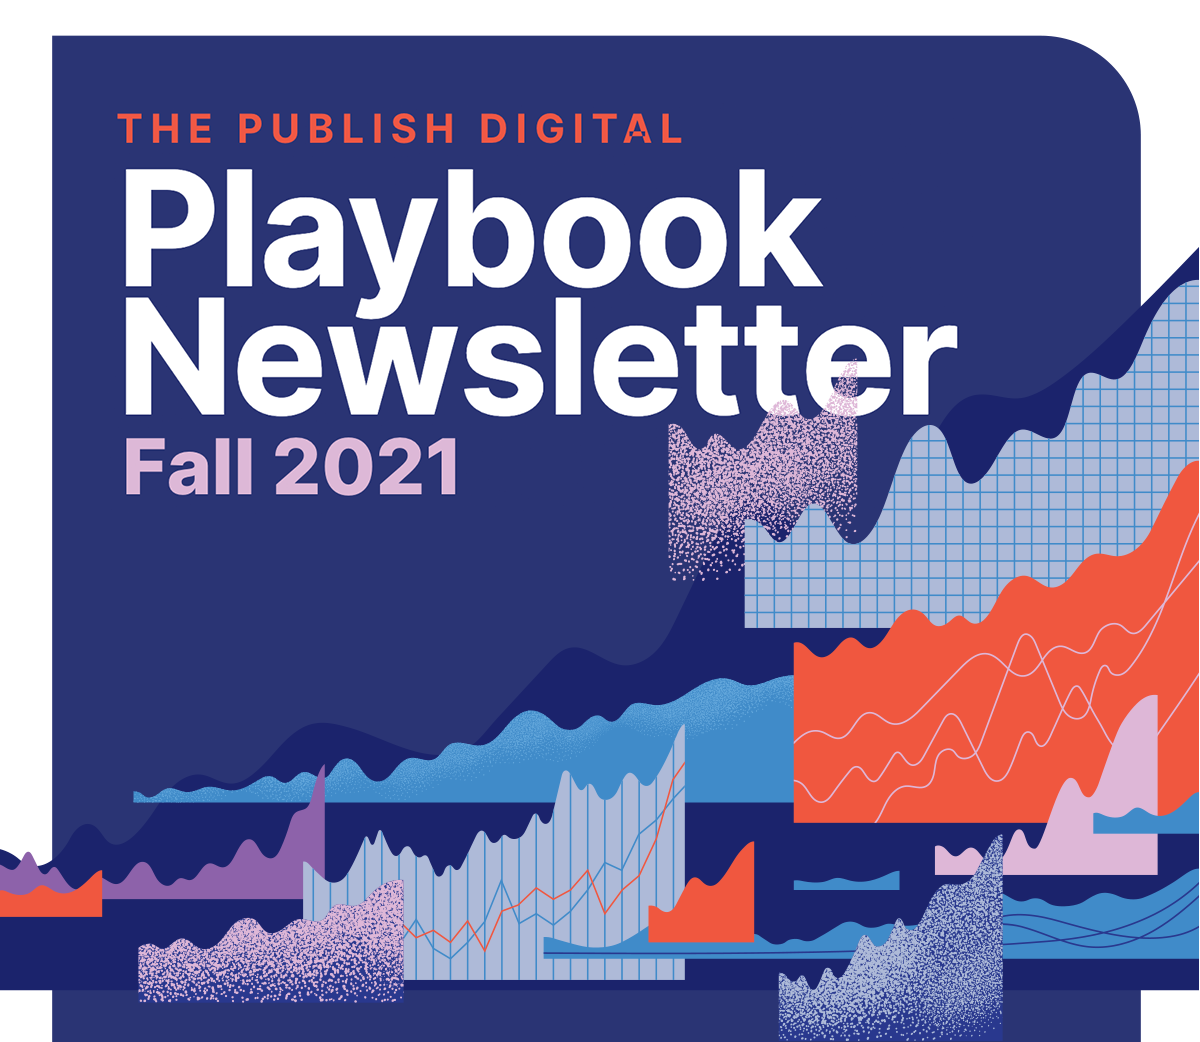 Publish Digital playbook newsletter